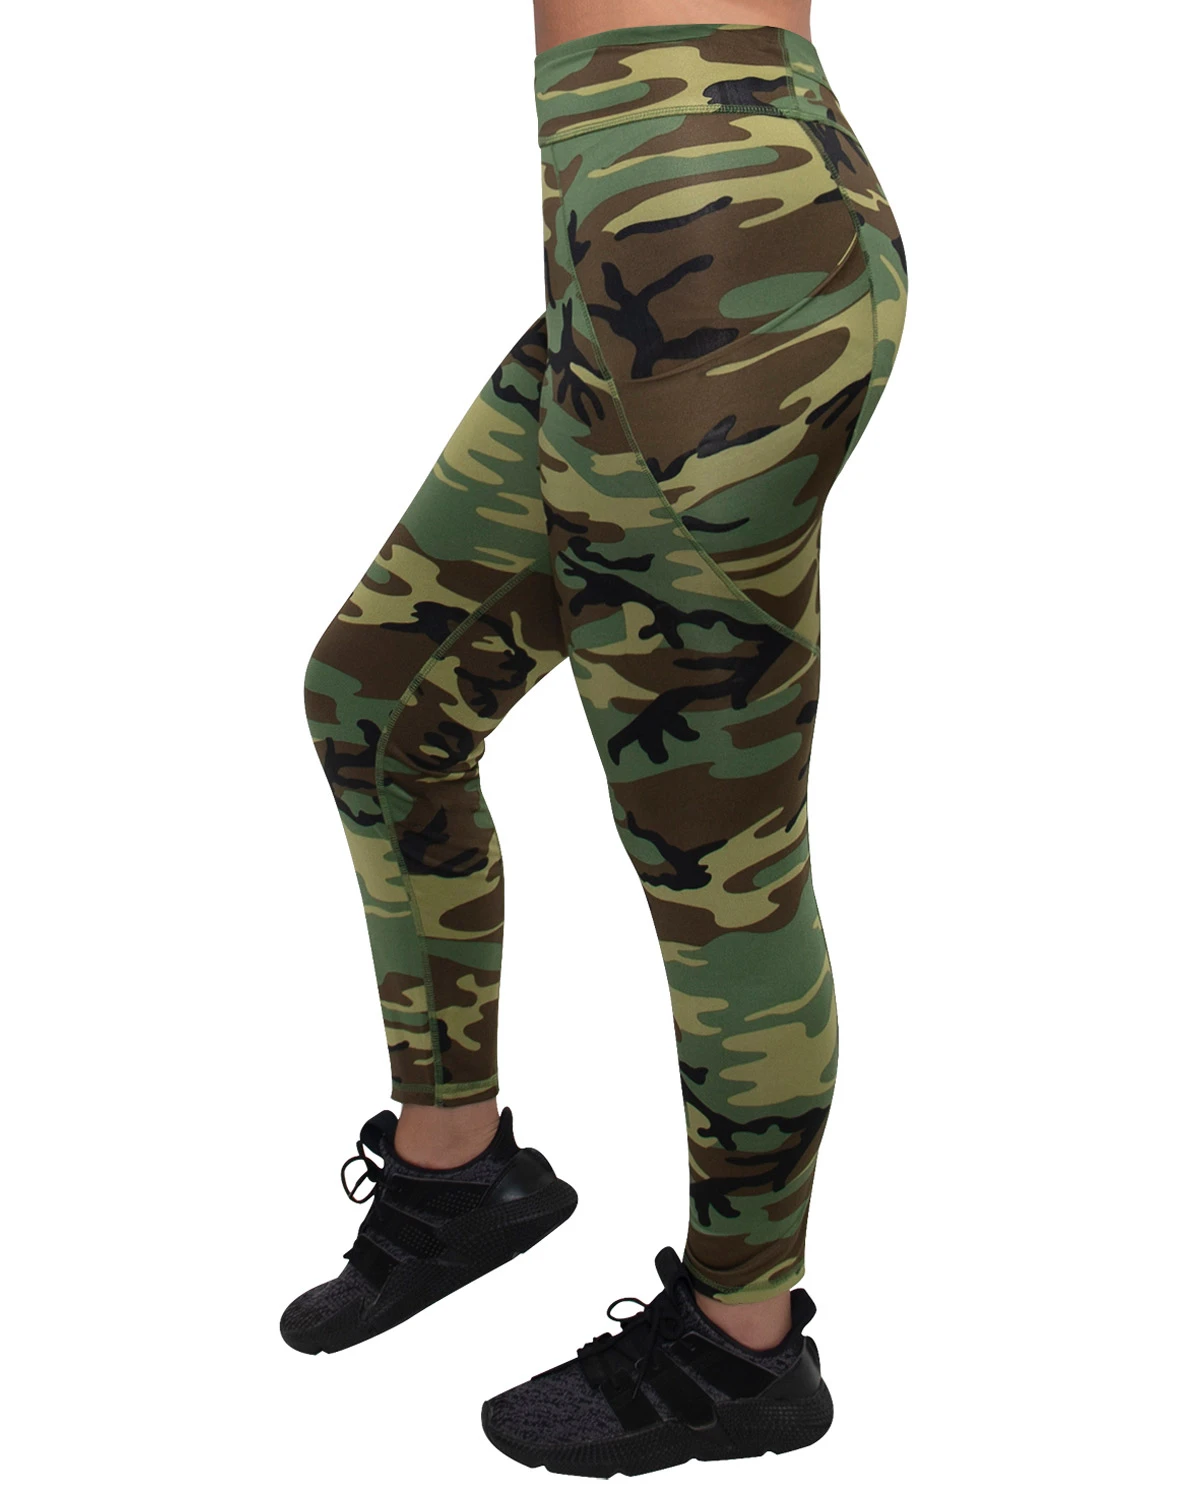 Super Comfy Camouflage Print Workout Leggings - Fanduco